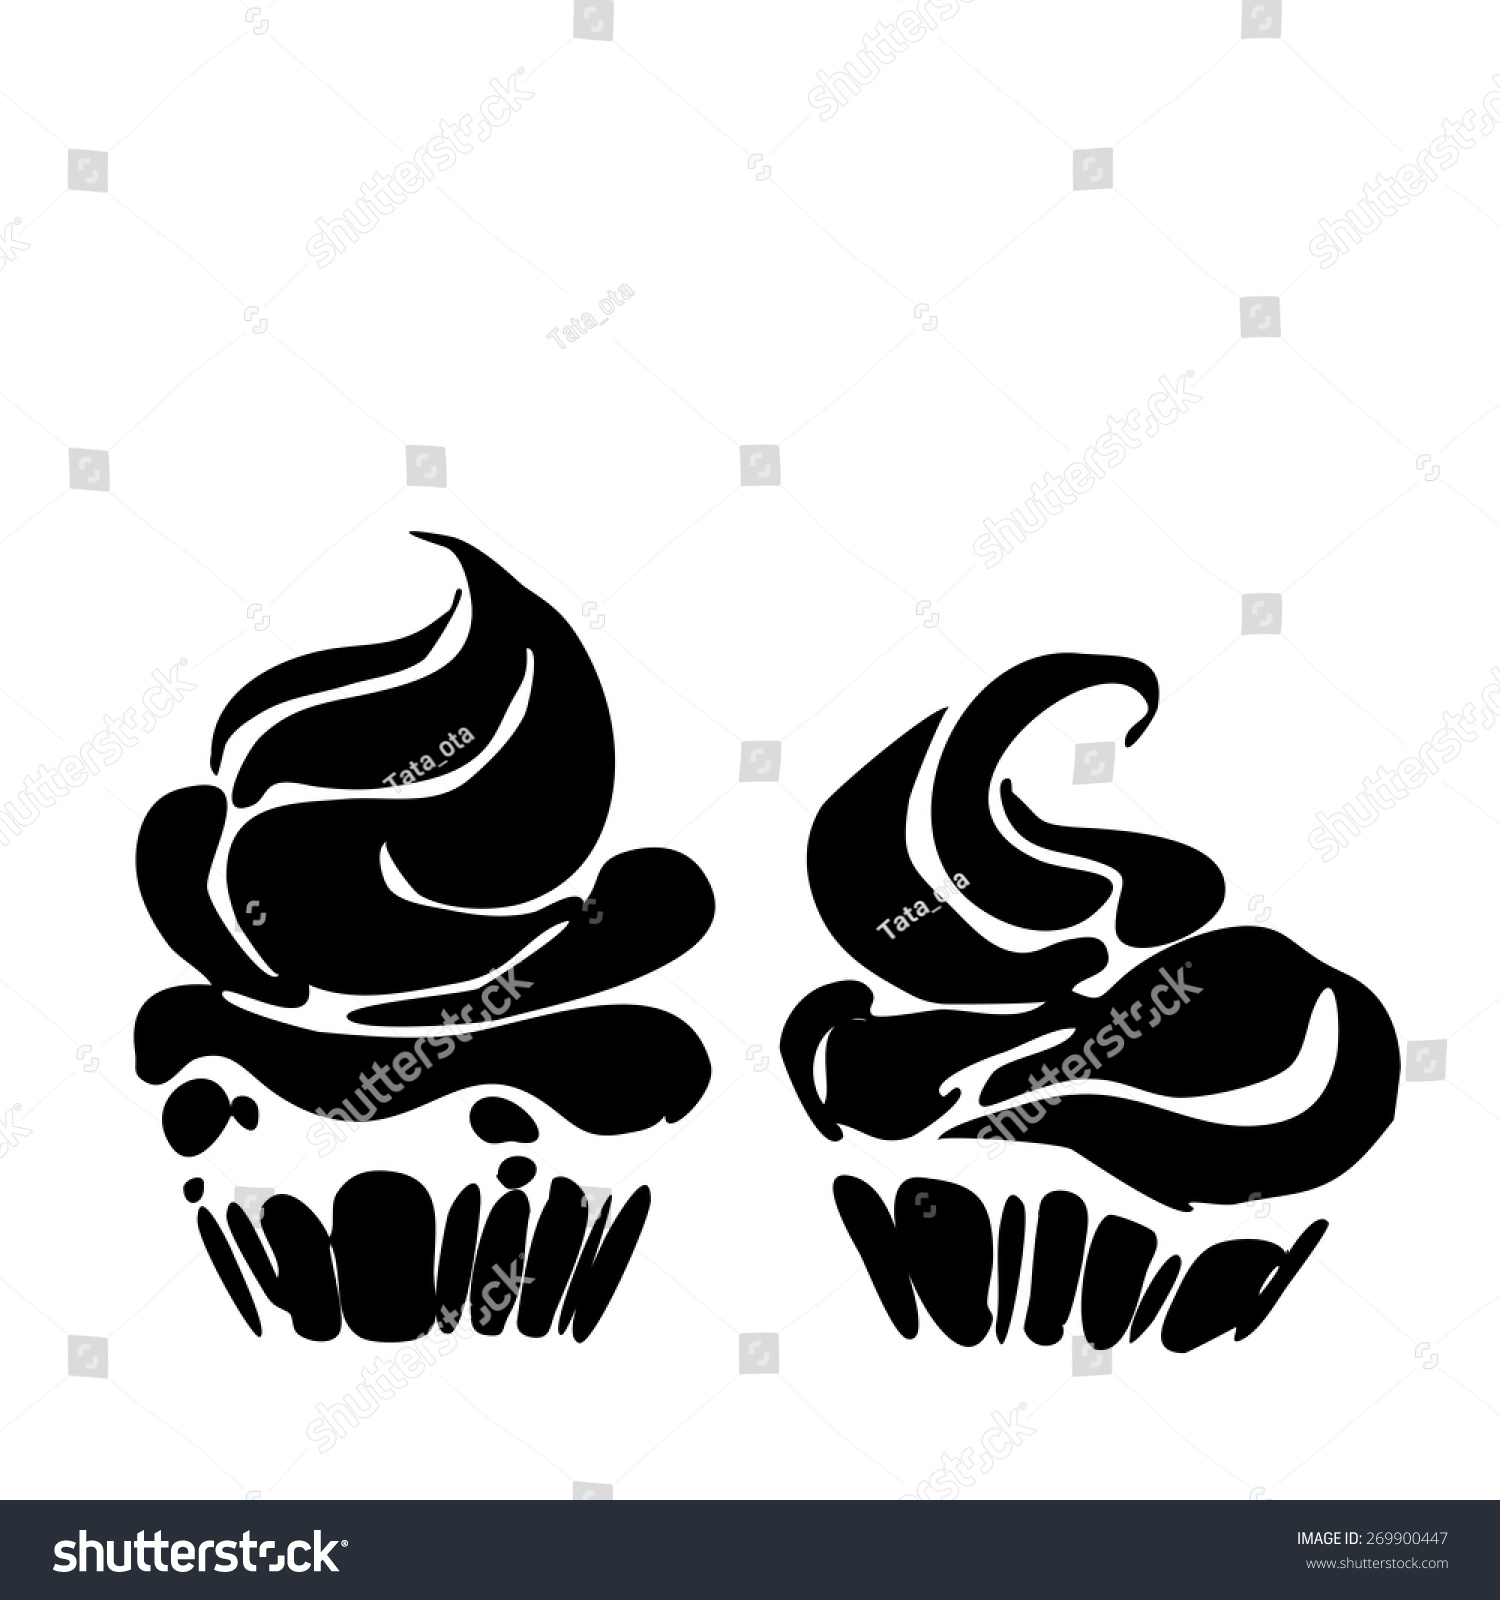 Vector Black White Cupcakes Icons Stock Vector 269900447 - Shutterstock